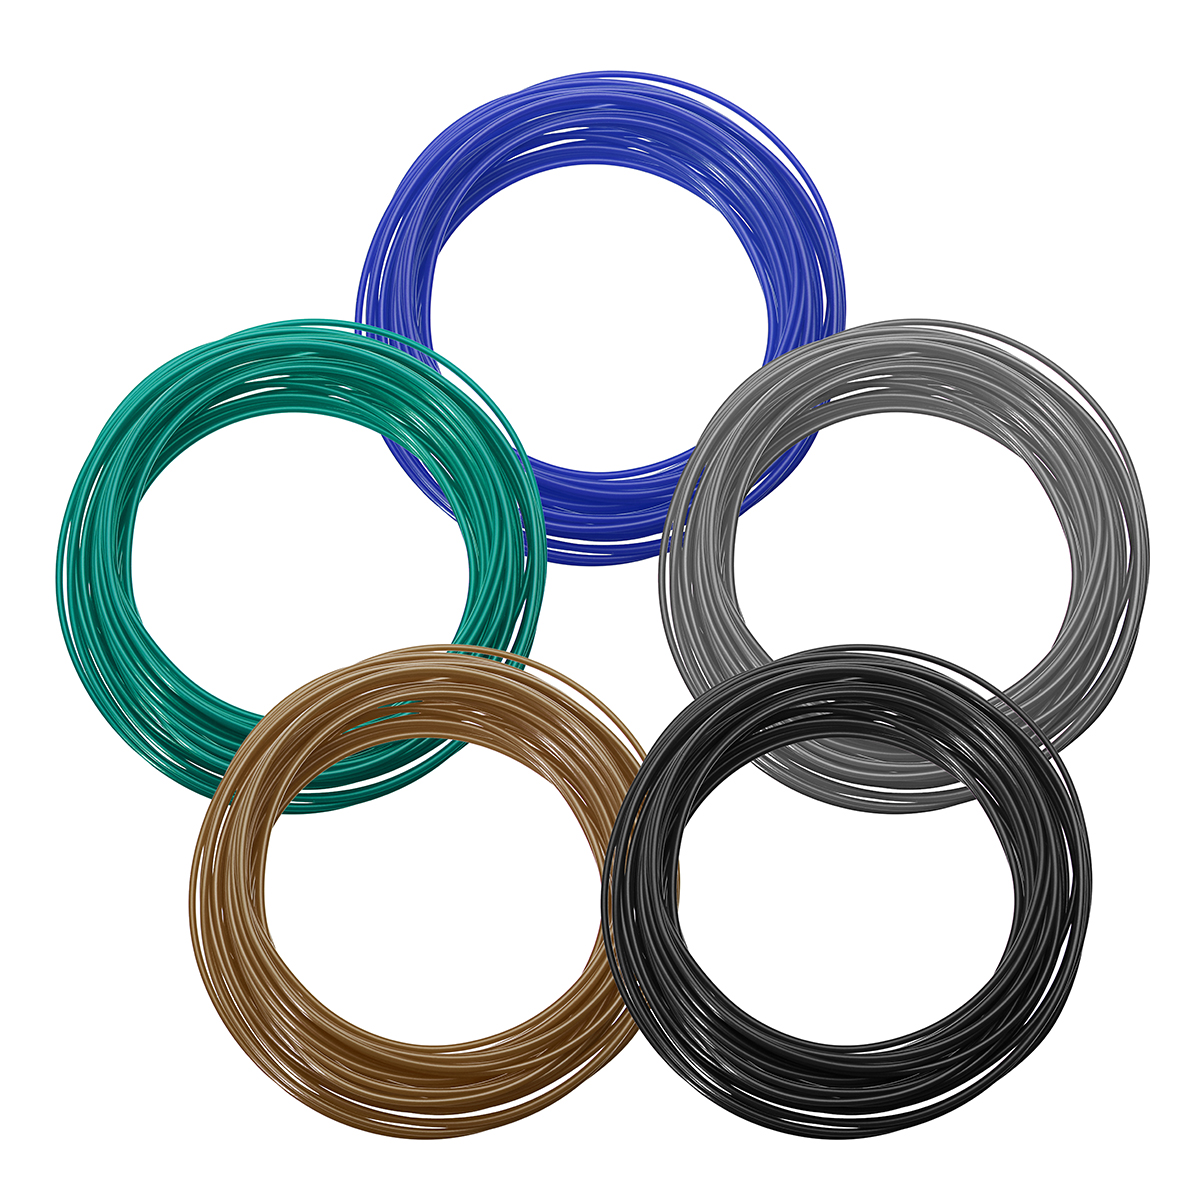 20 Colors/Pack 5/10m Length Per Color PLA 1.75mm Filament for 3D Printing Pen 0.4mm Nozzle 16